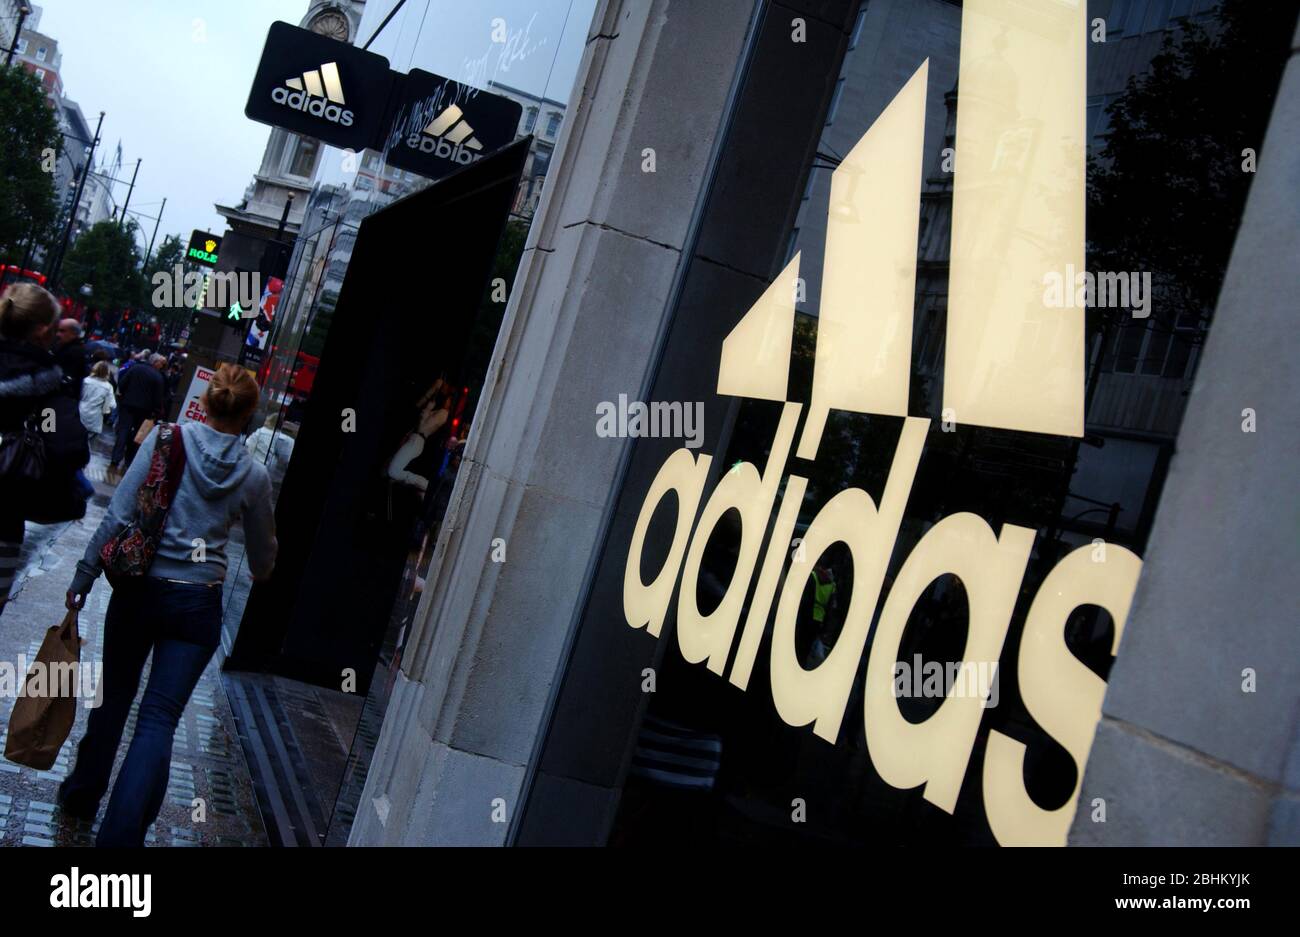 The Adidas store on Oxford Street, London Stock Photo - Alamy